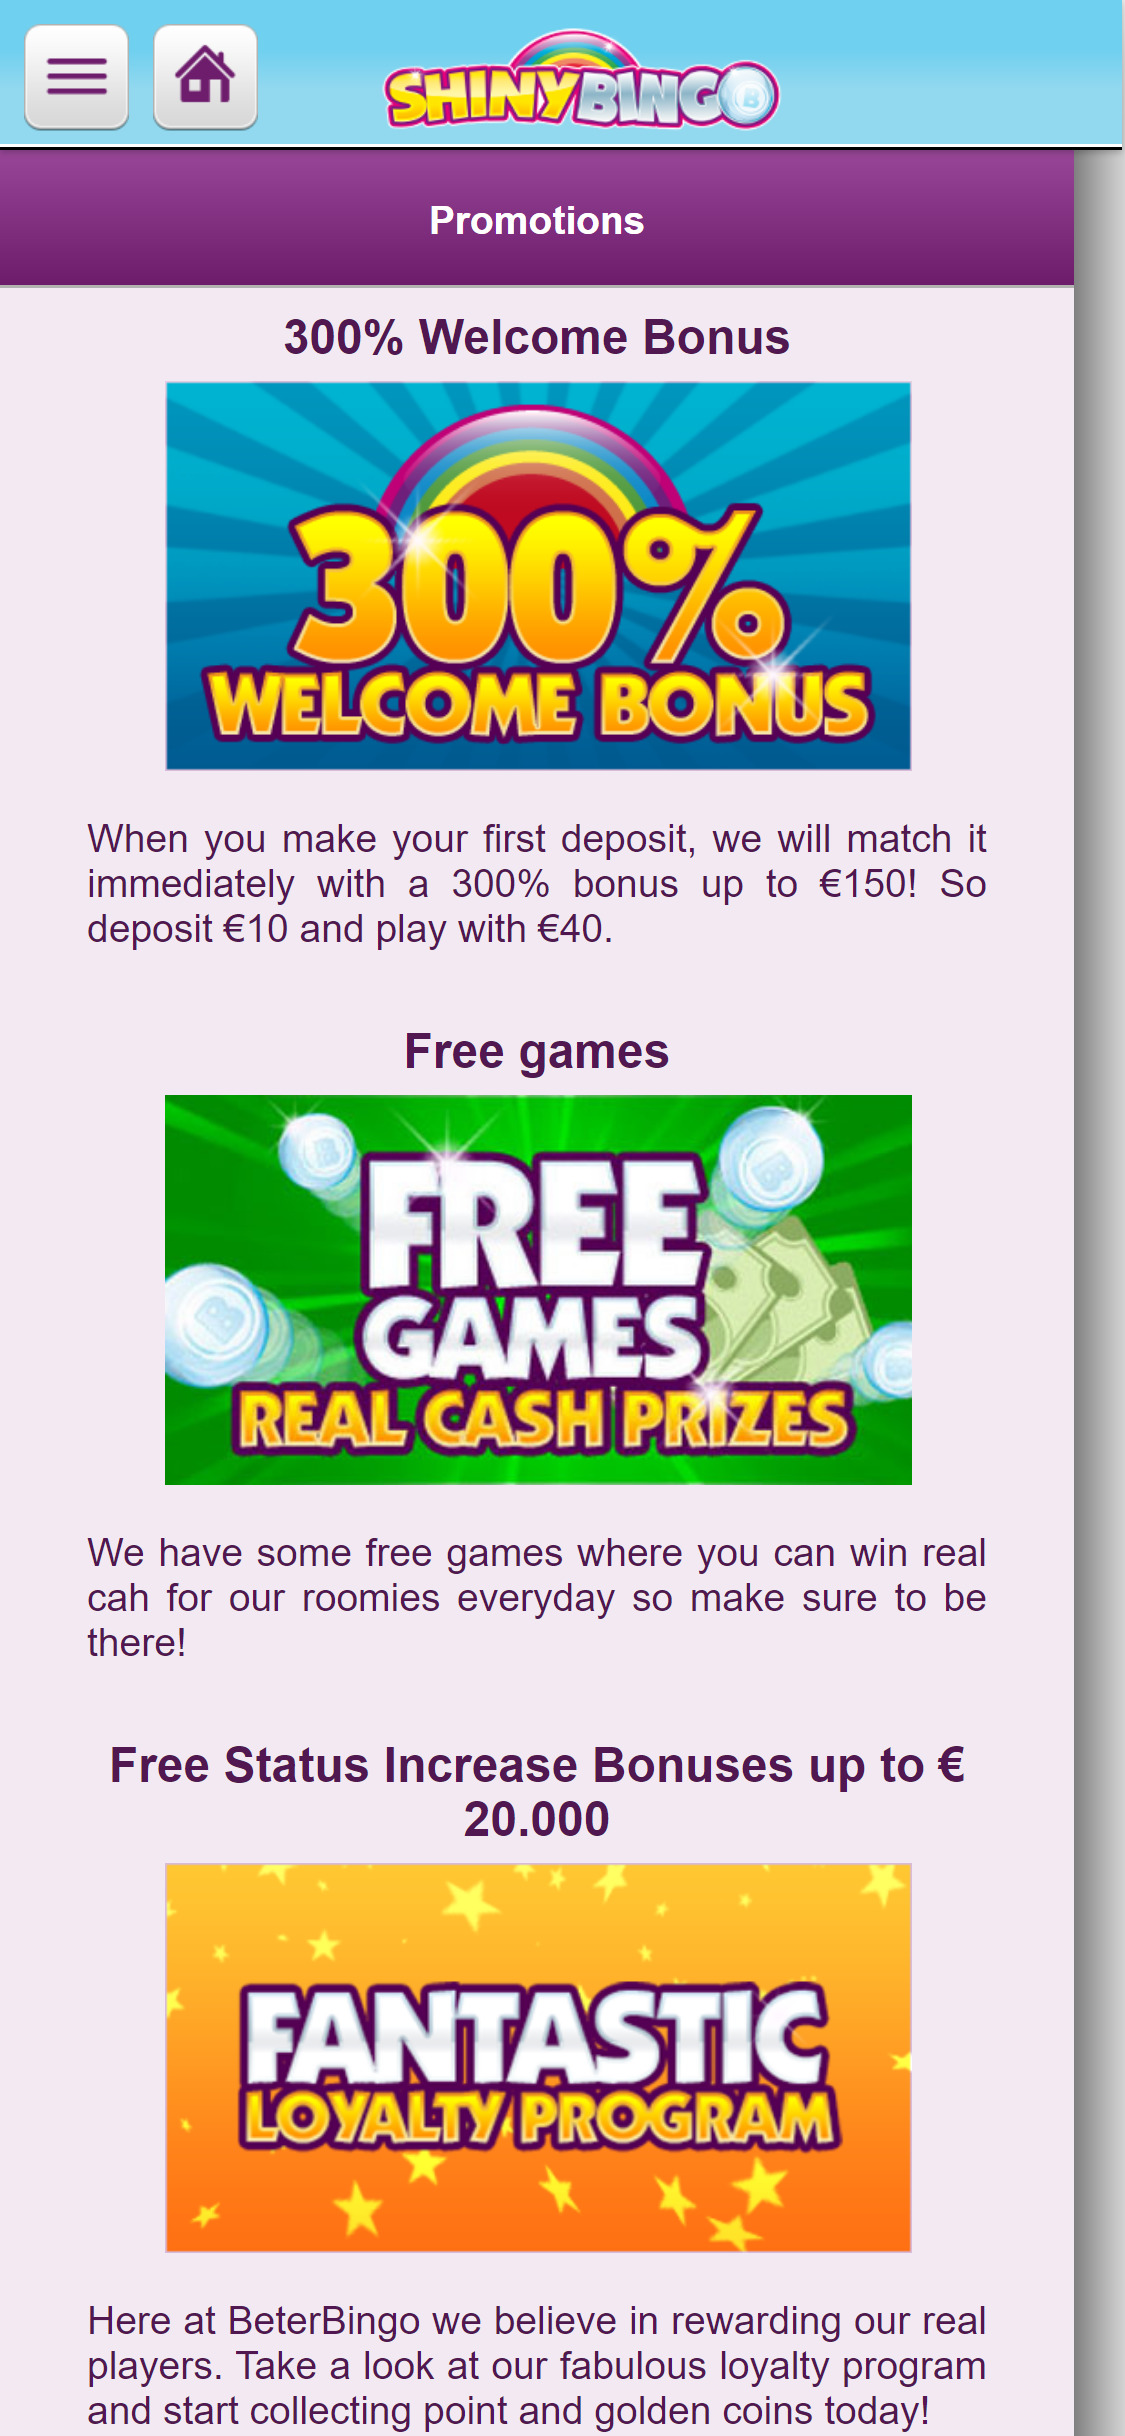 Bingo Games No Deposit Bonus